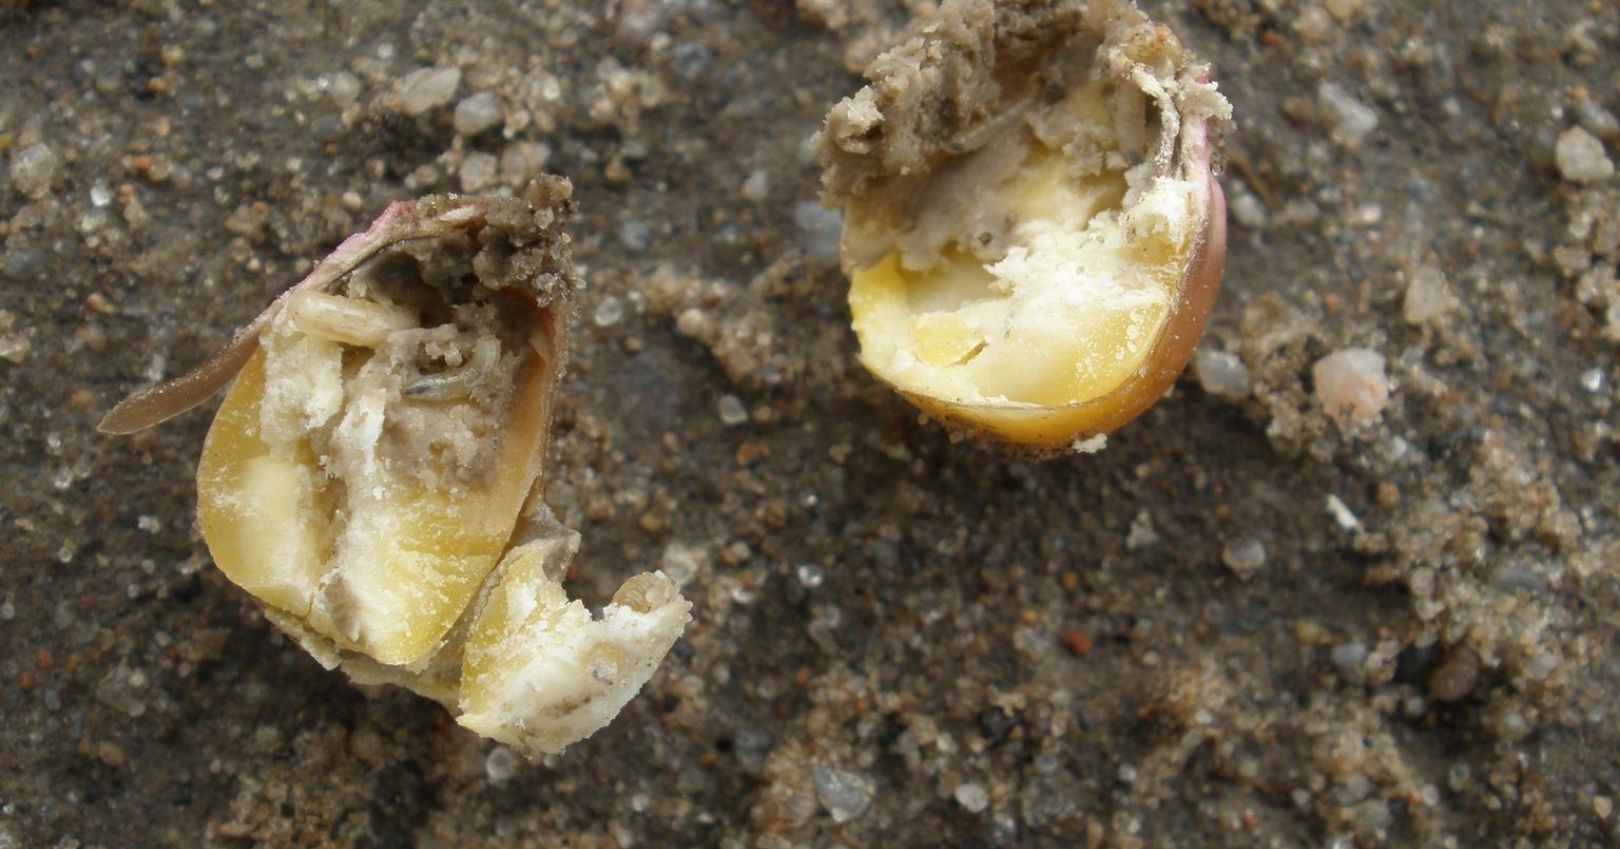 Seedcorn Maggot Damage to Corn Kernels